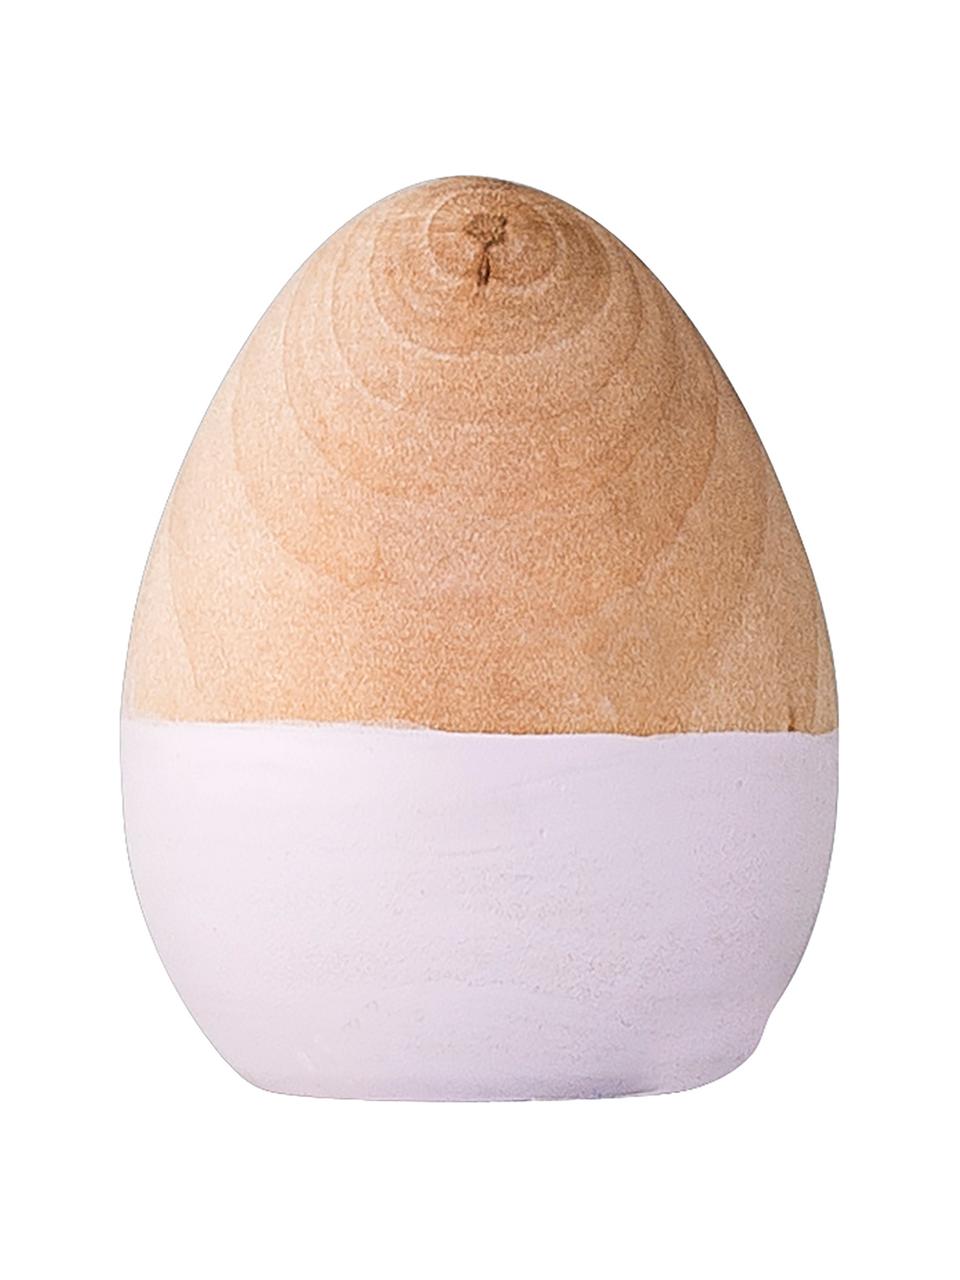 Uovo decorativo Nature, Betulla, Marrone chiaro, bianco, Ø 4 x Alt. 5 cm